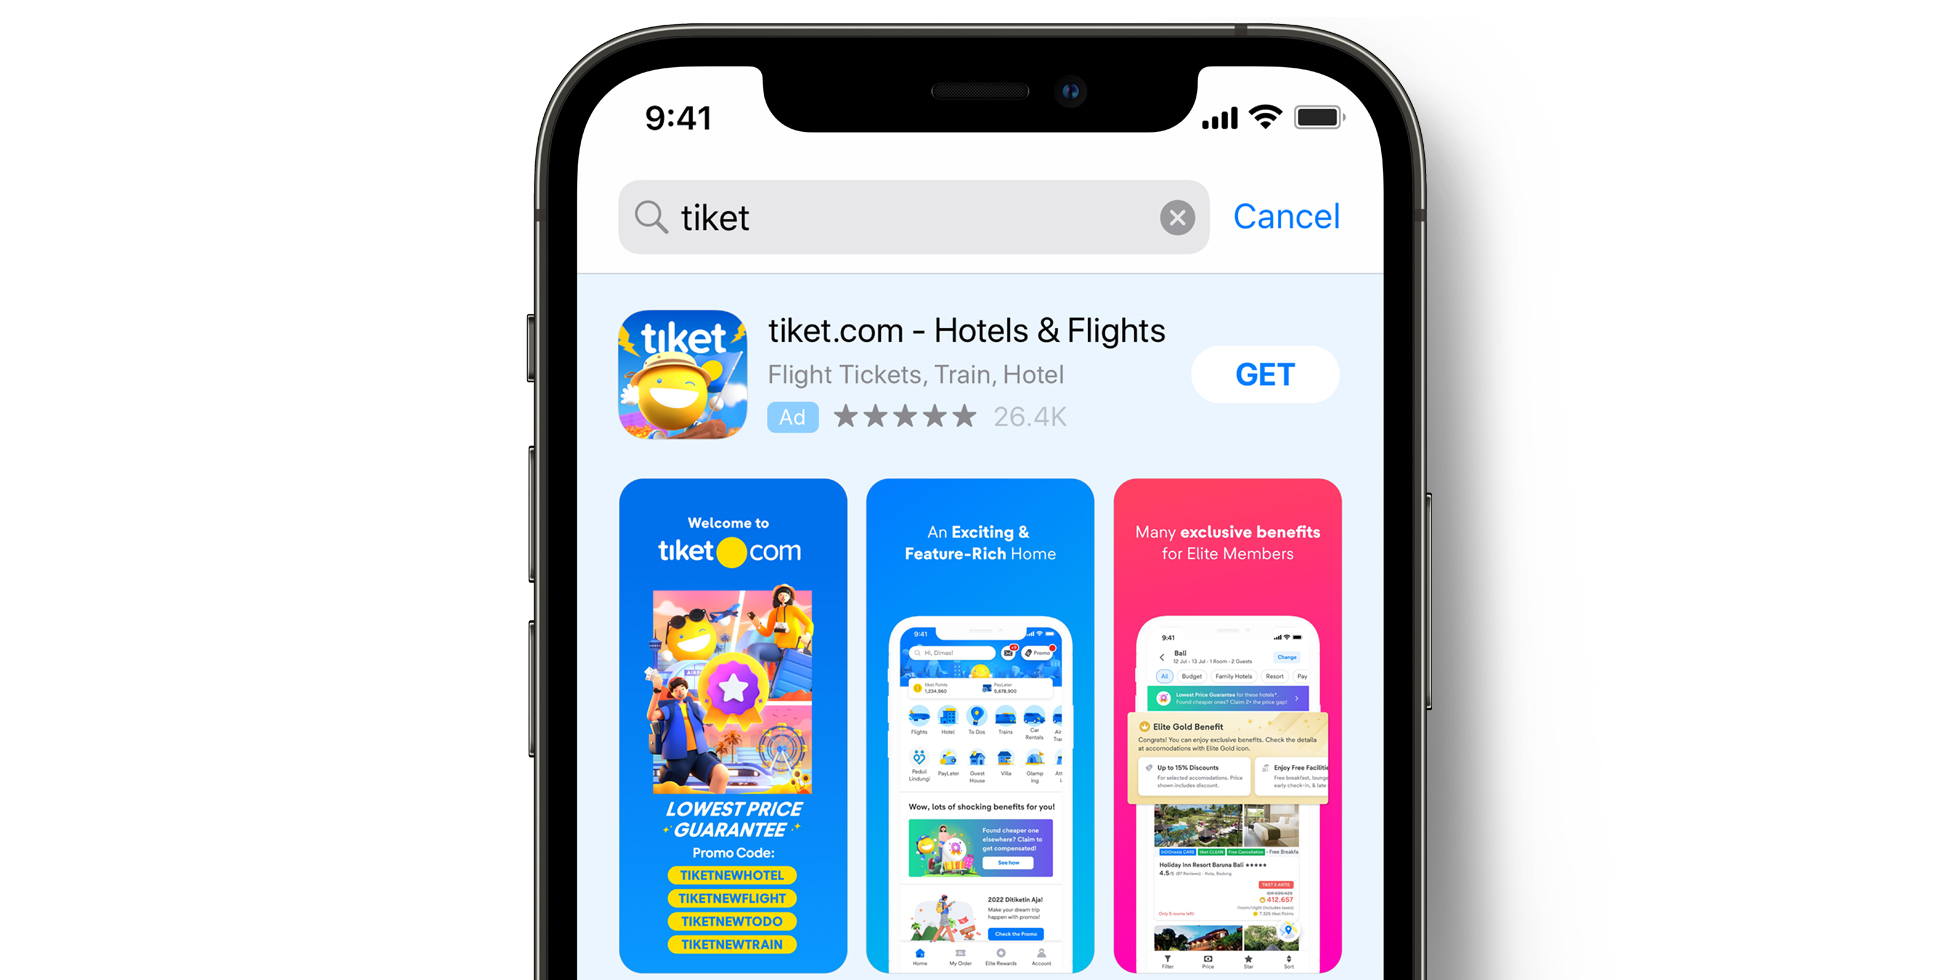 tiket.com Anzeige im App Store